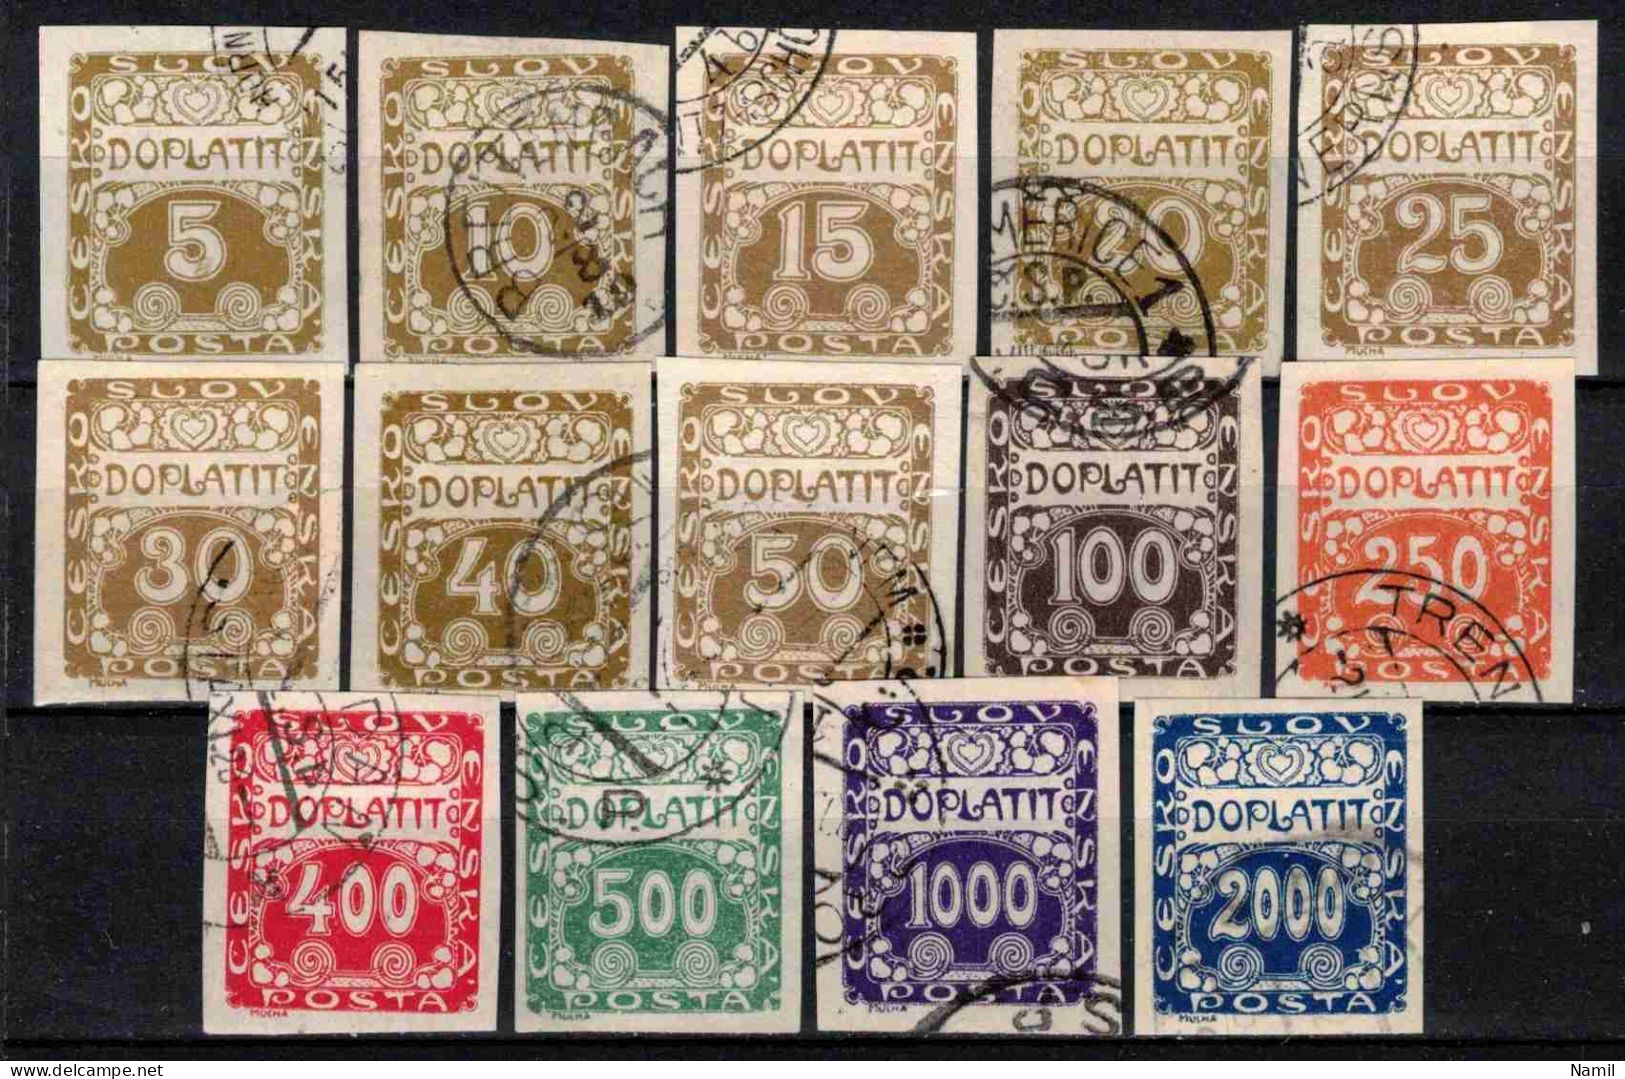 Tchécoslovaquie 1919 Mi P 1-14 (Yv TT 1-14), Obliteré, - Used Stamps